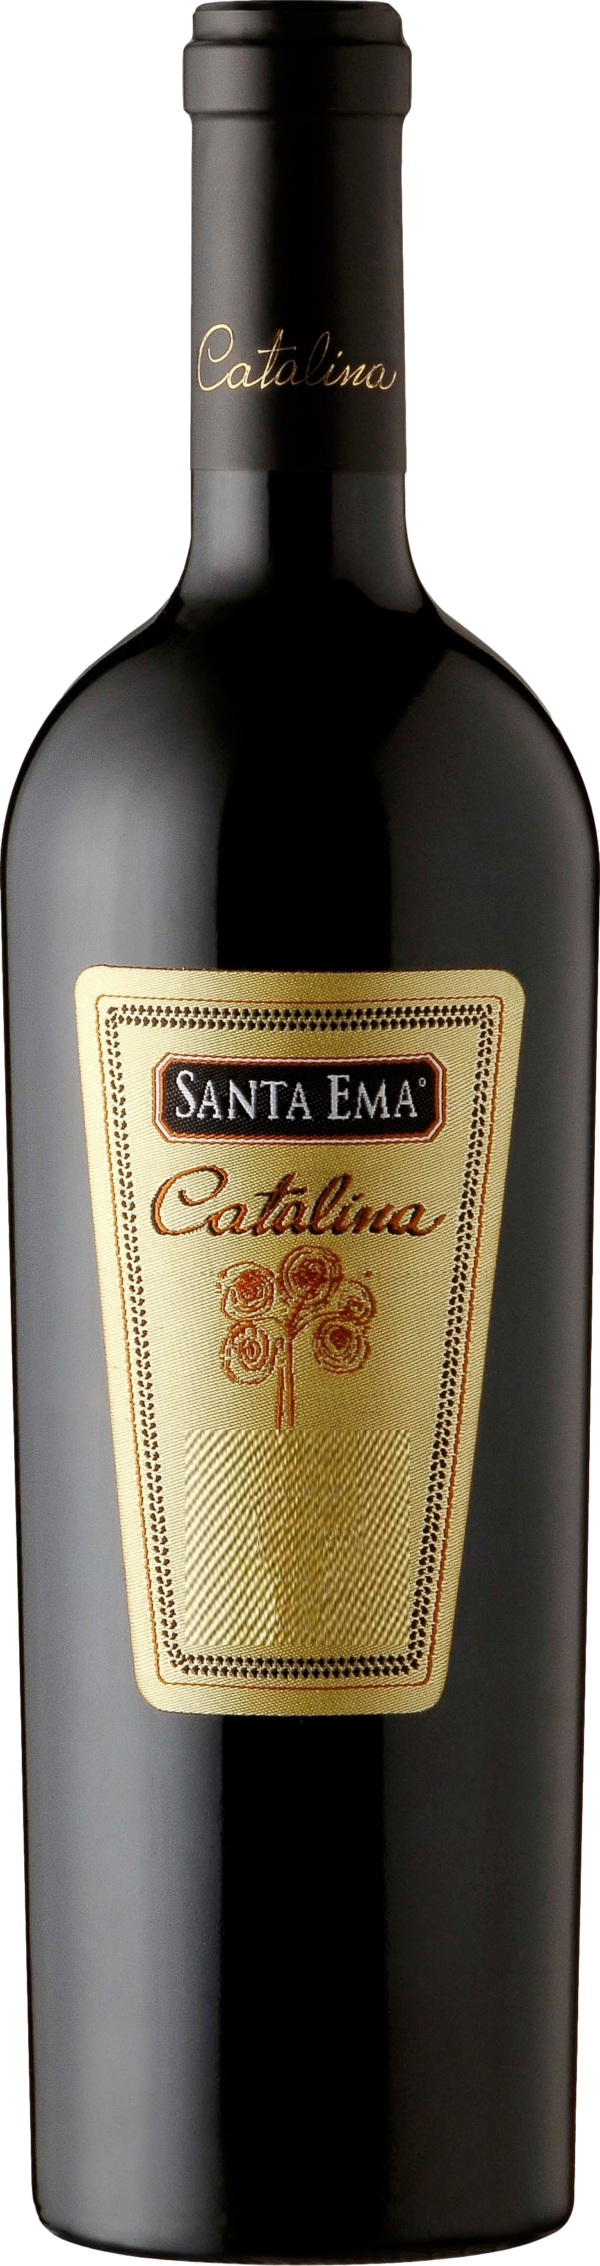 Product image of Santa Ema Catalina 2019 from 8wines